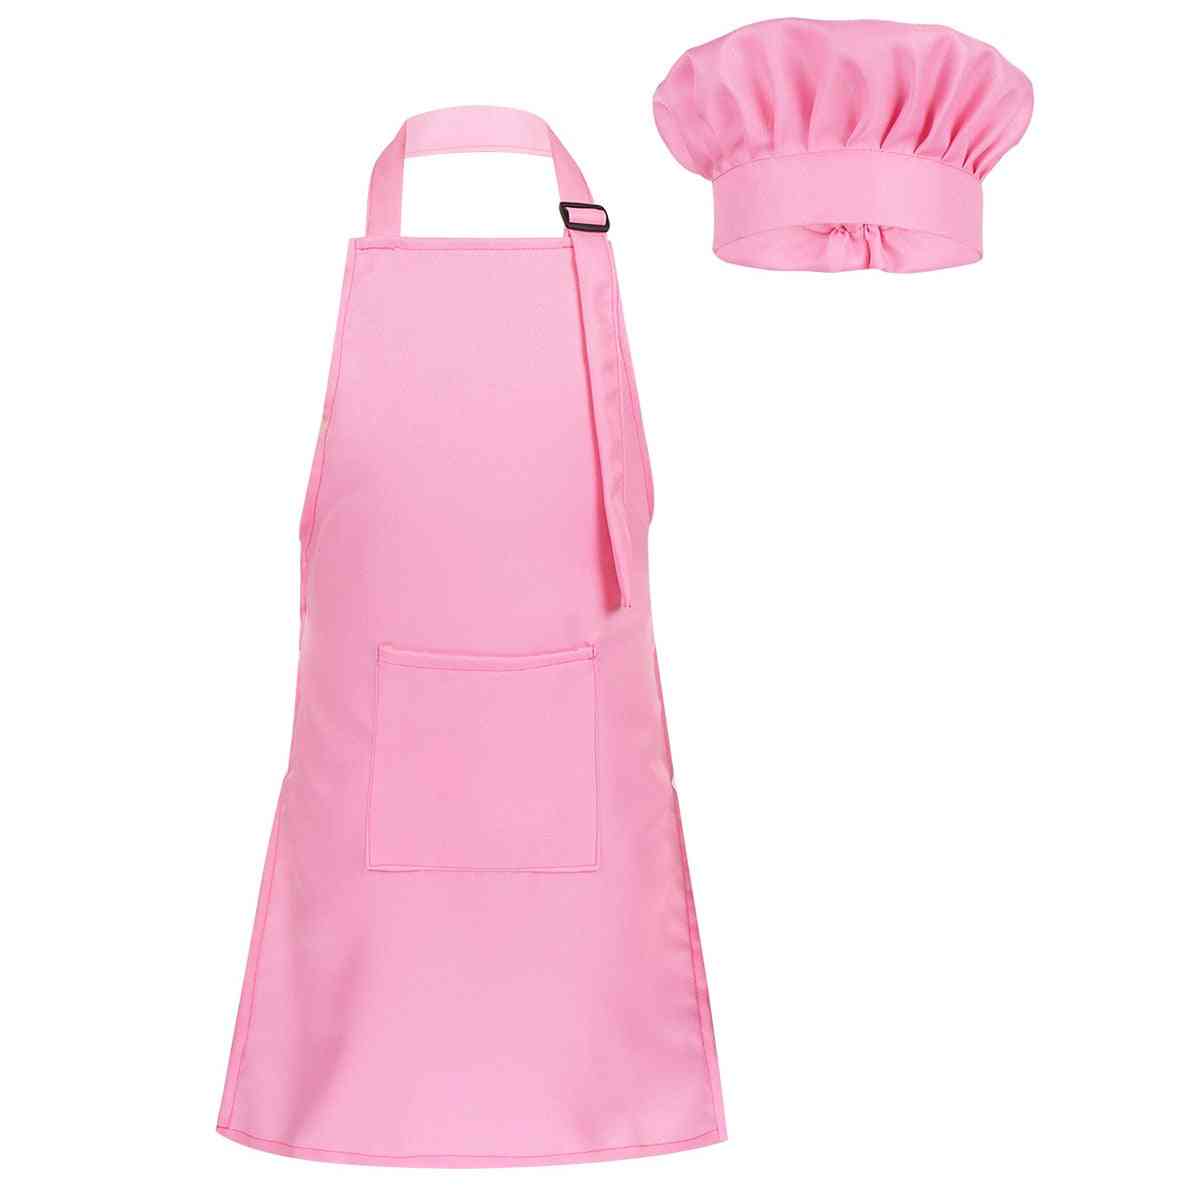 Child Kids Adjustable Apron And Chef Hat Set Kitchen Cooking Uniform Baking Painting Training Wear